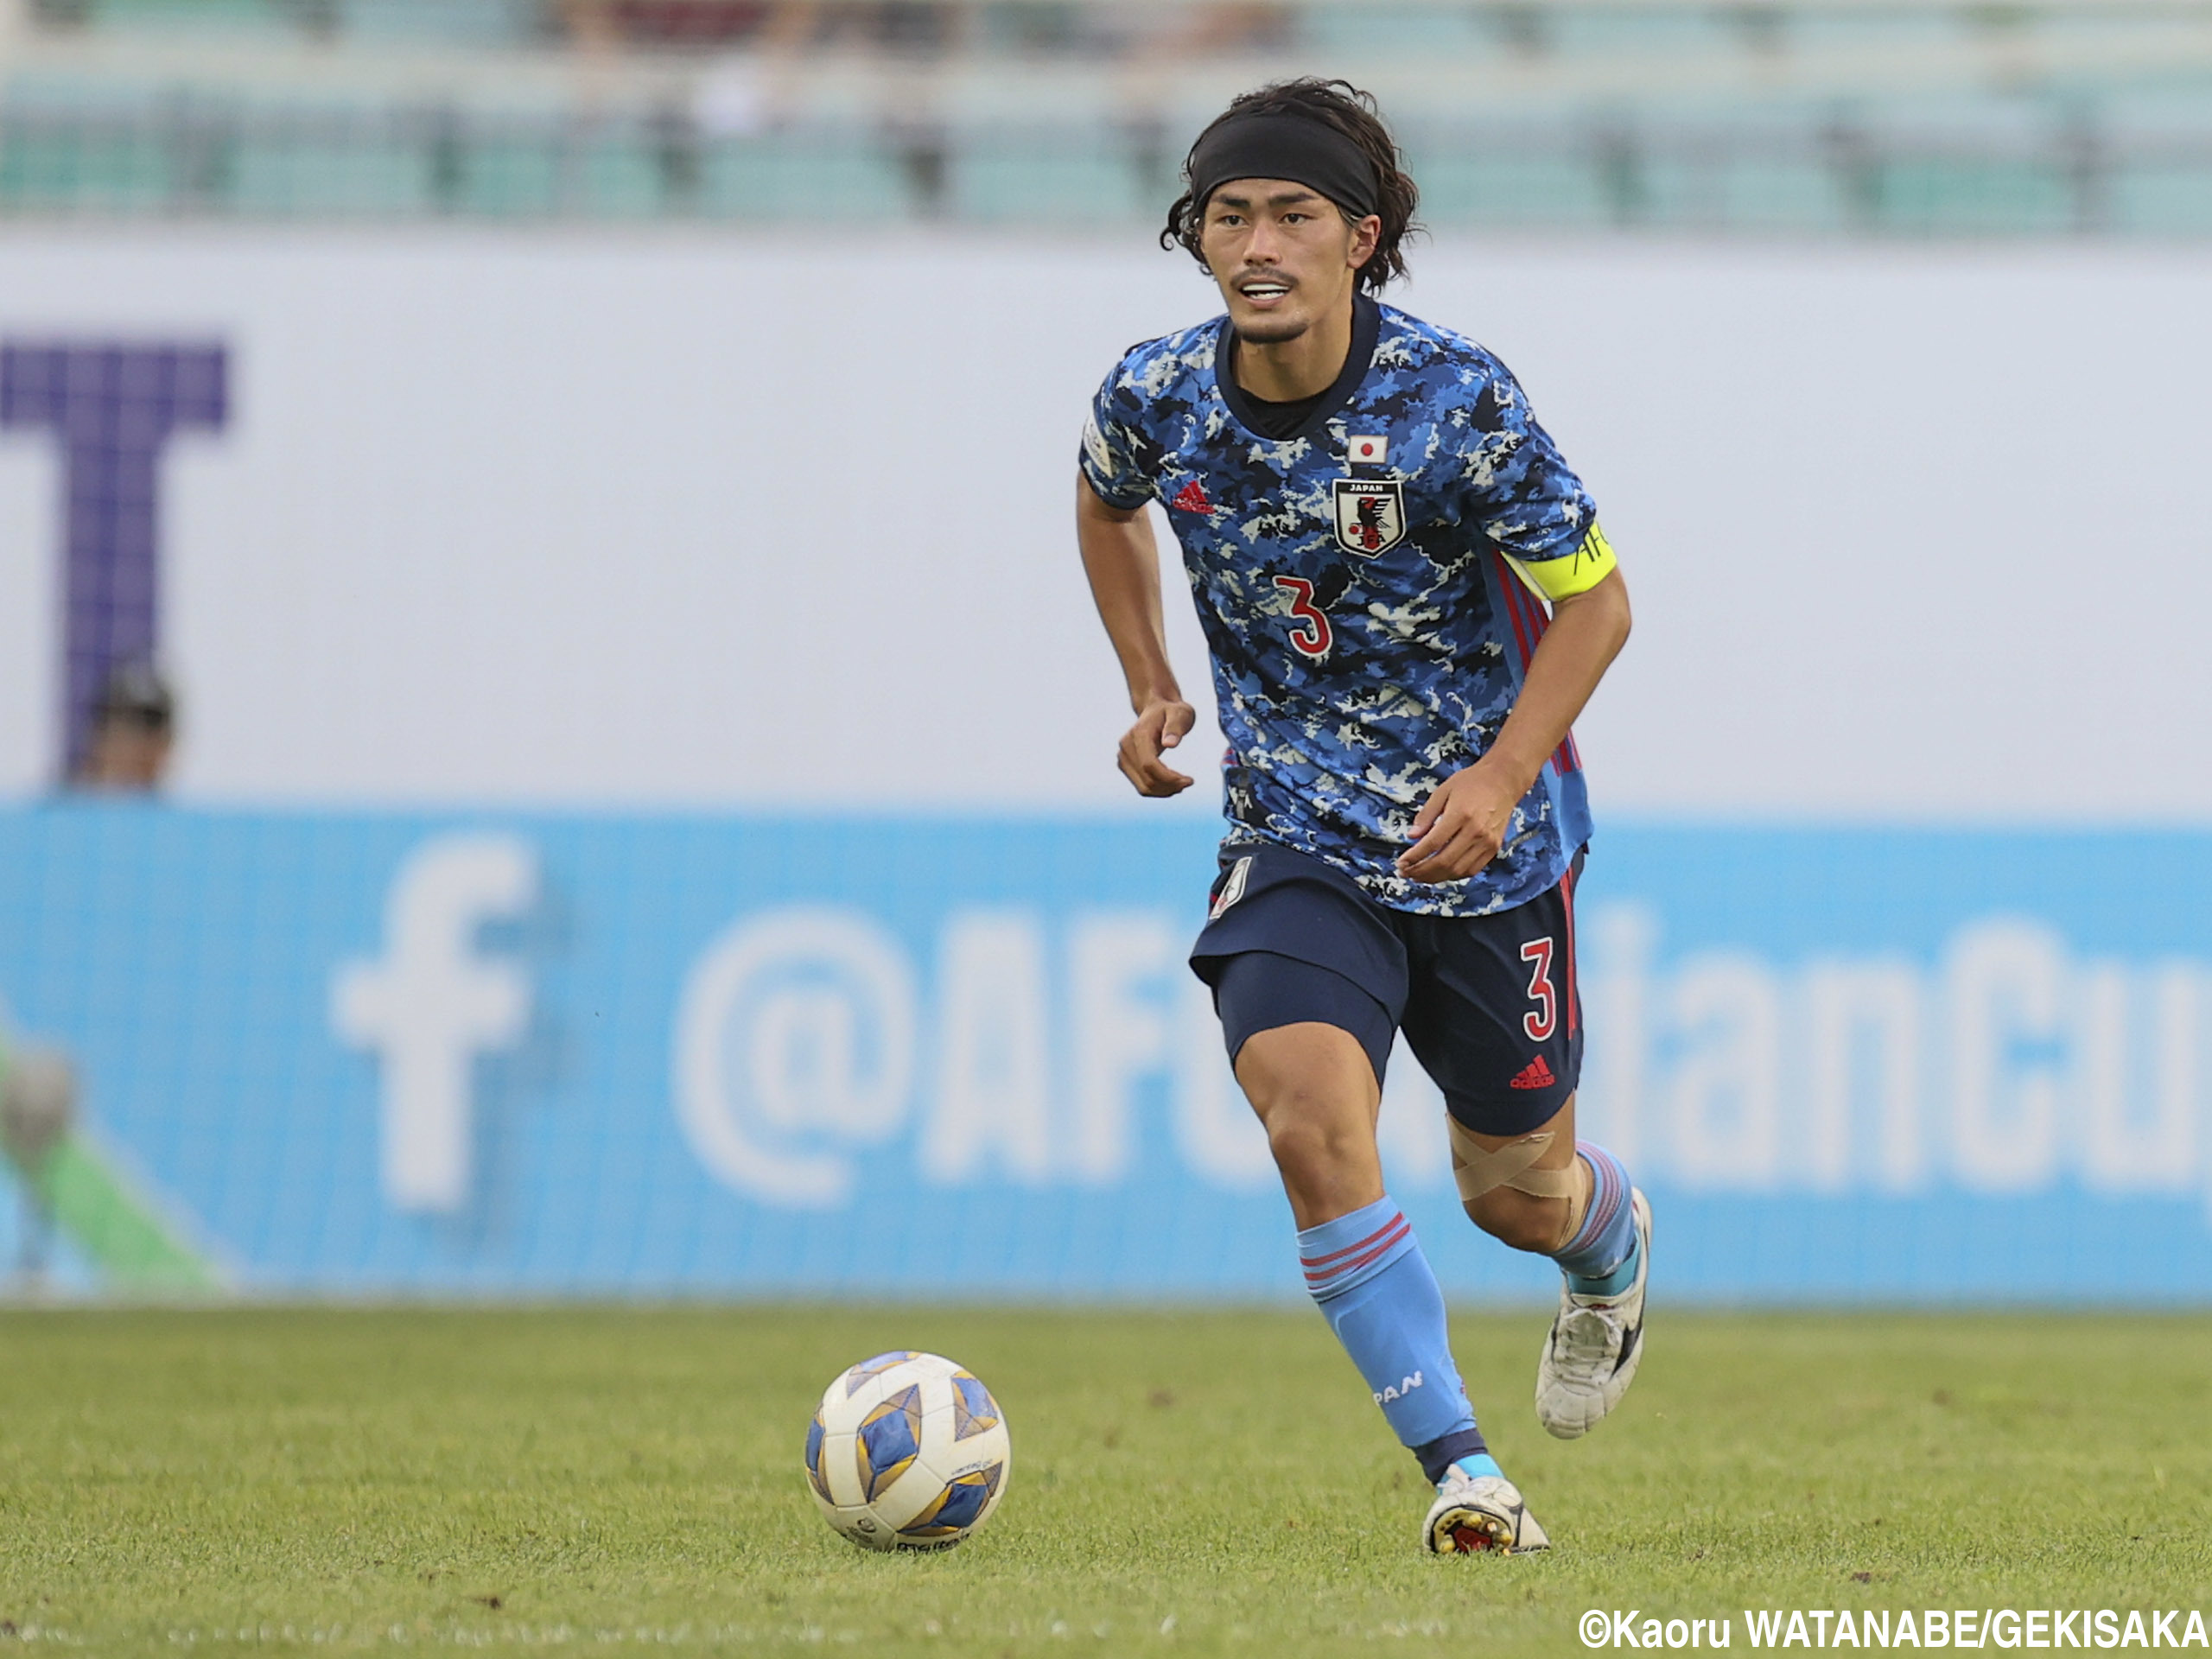 U23アジア杯初出場のU-21日本代表DF馬場晴也はアシスト&無失点でGL突破に貢献(6枚)